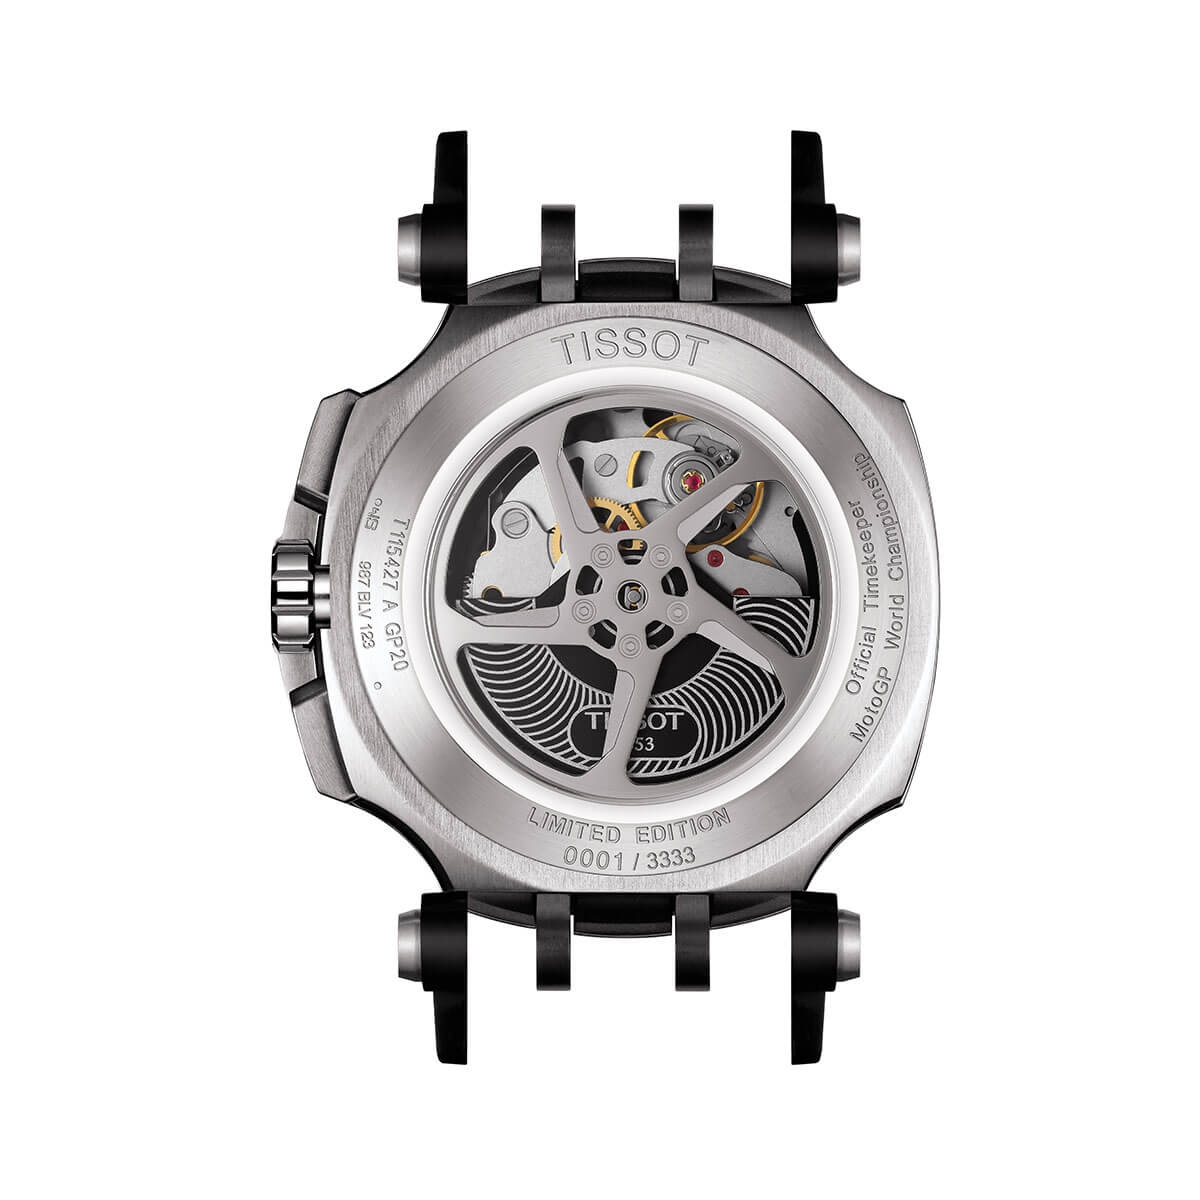 Tissot T-Race MotoGP Automatic Chronograph 2020 Limited Edition